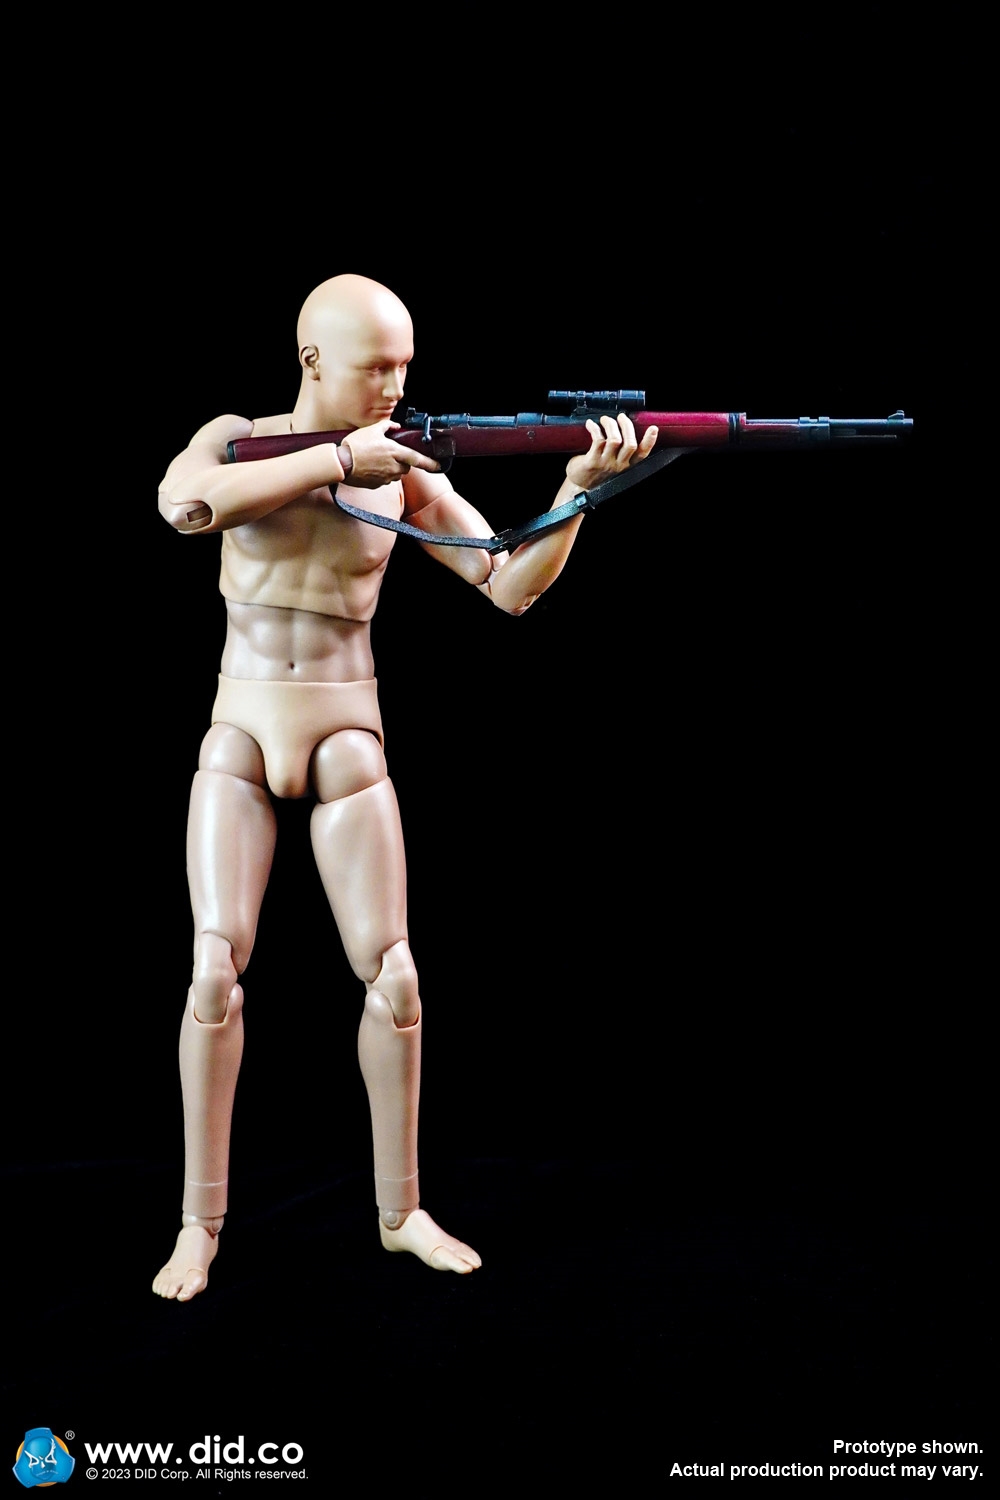 All New Advanced Body - Slim Version 2.0 - DiD 1/6 Scale Figure